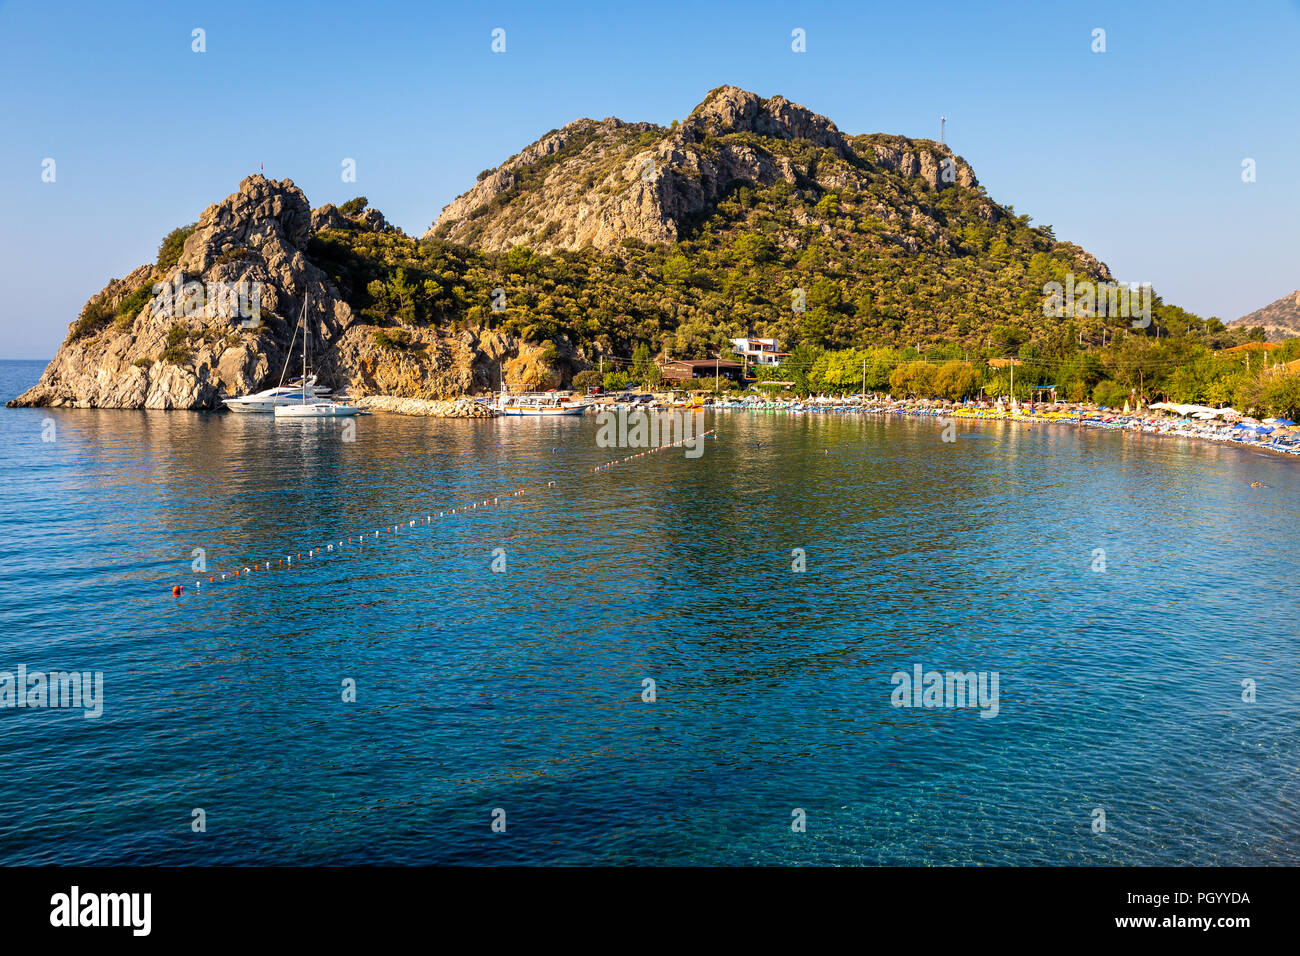 View from Hayitbuku bay near Mesudiye,Datca.Datça is a port town in southwestern Turkey. Stock Photo